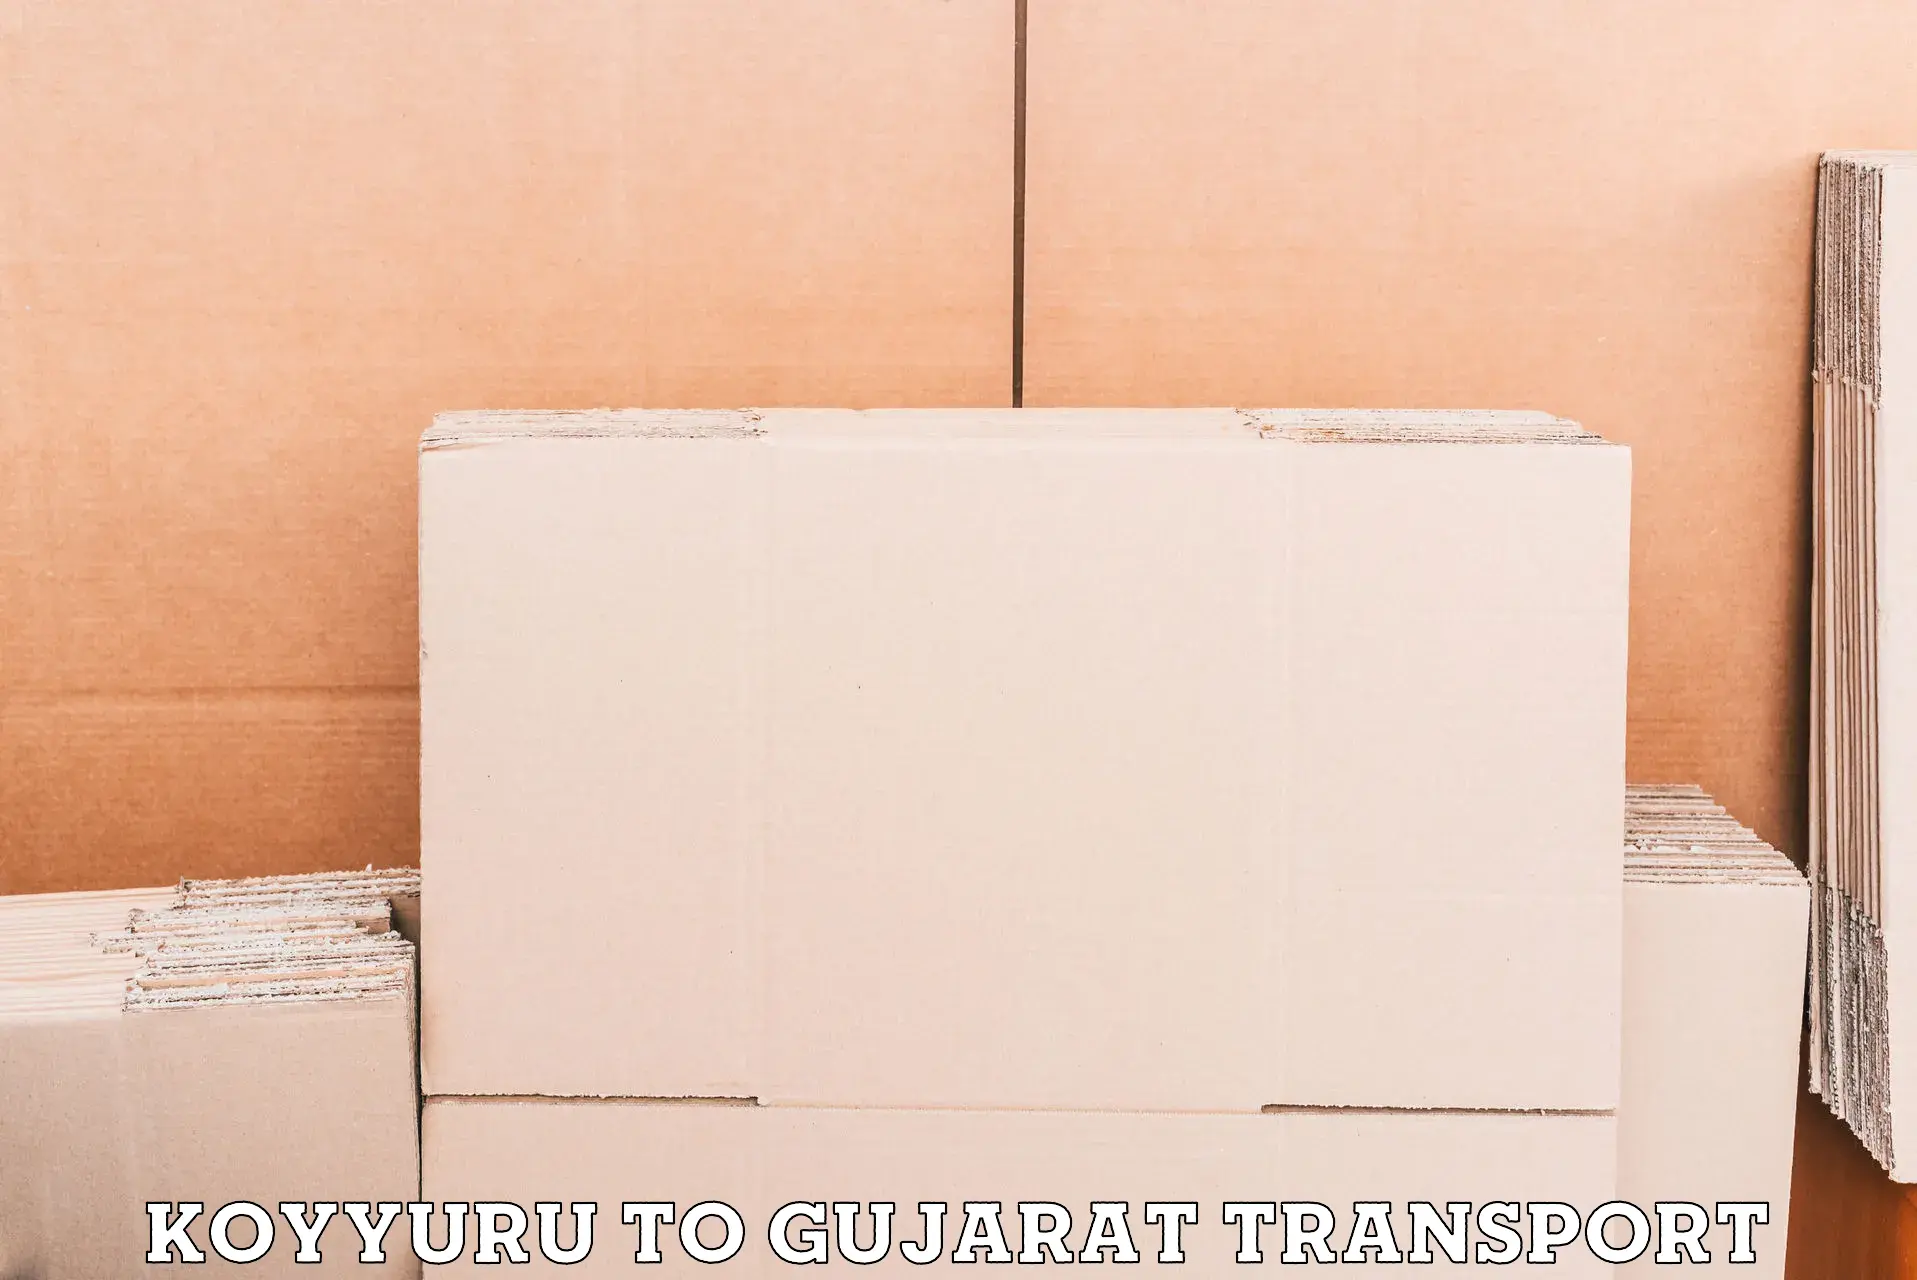 Shipping partner Koyyuru to IIT Gandhi Nagar